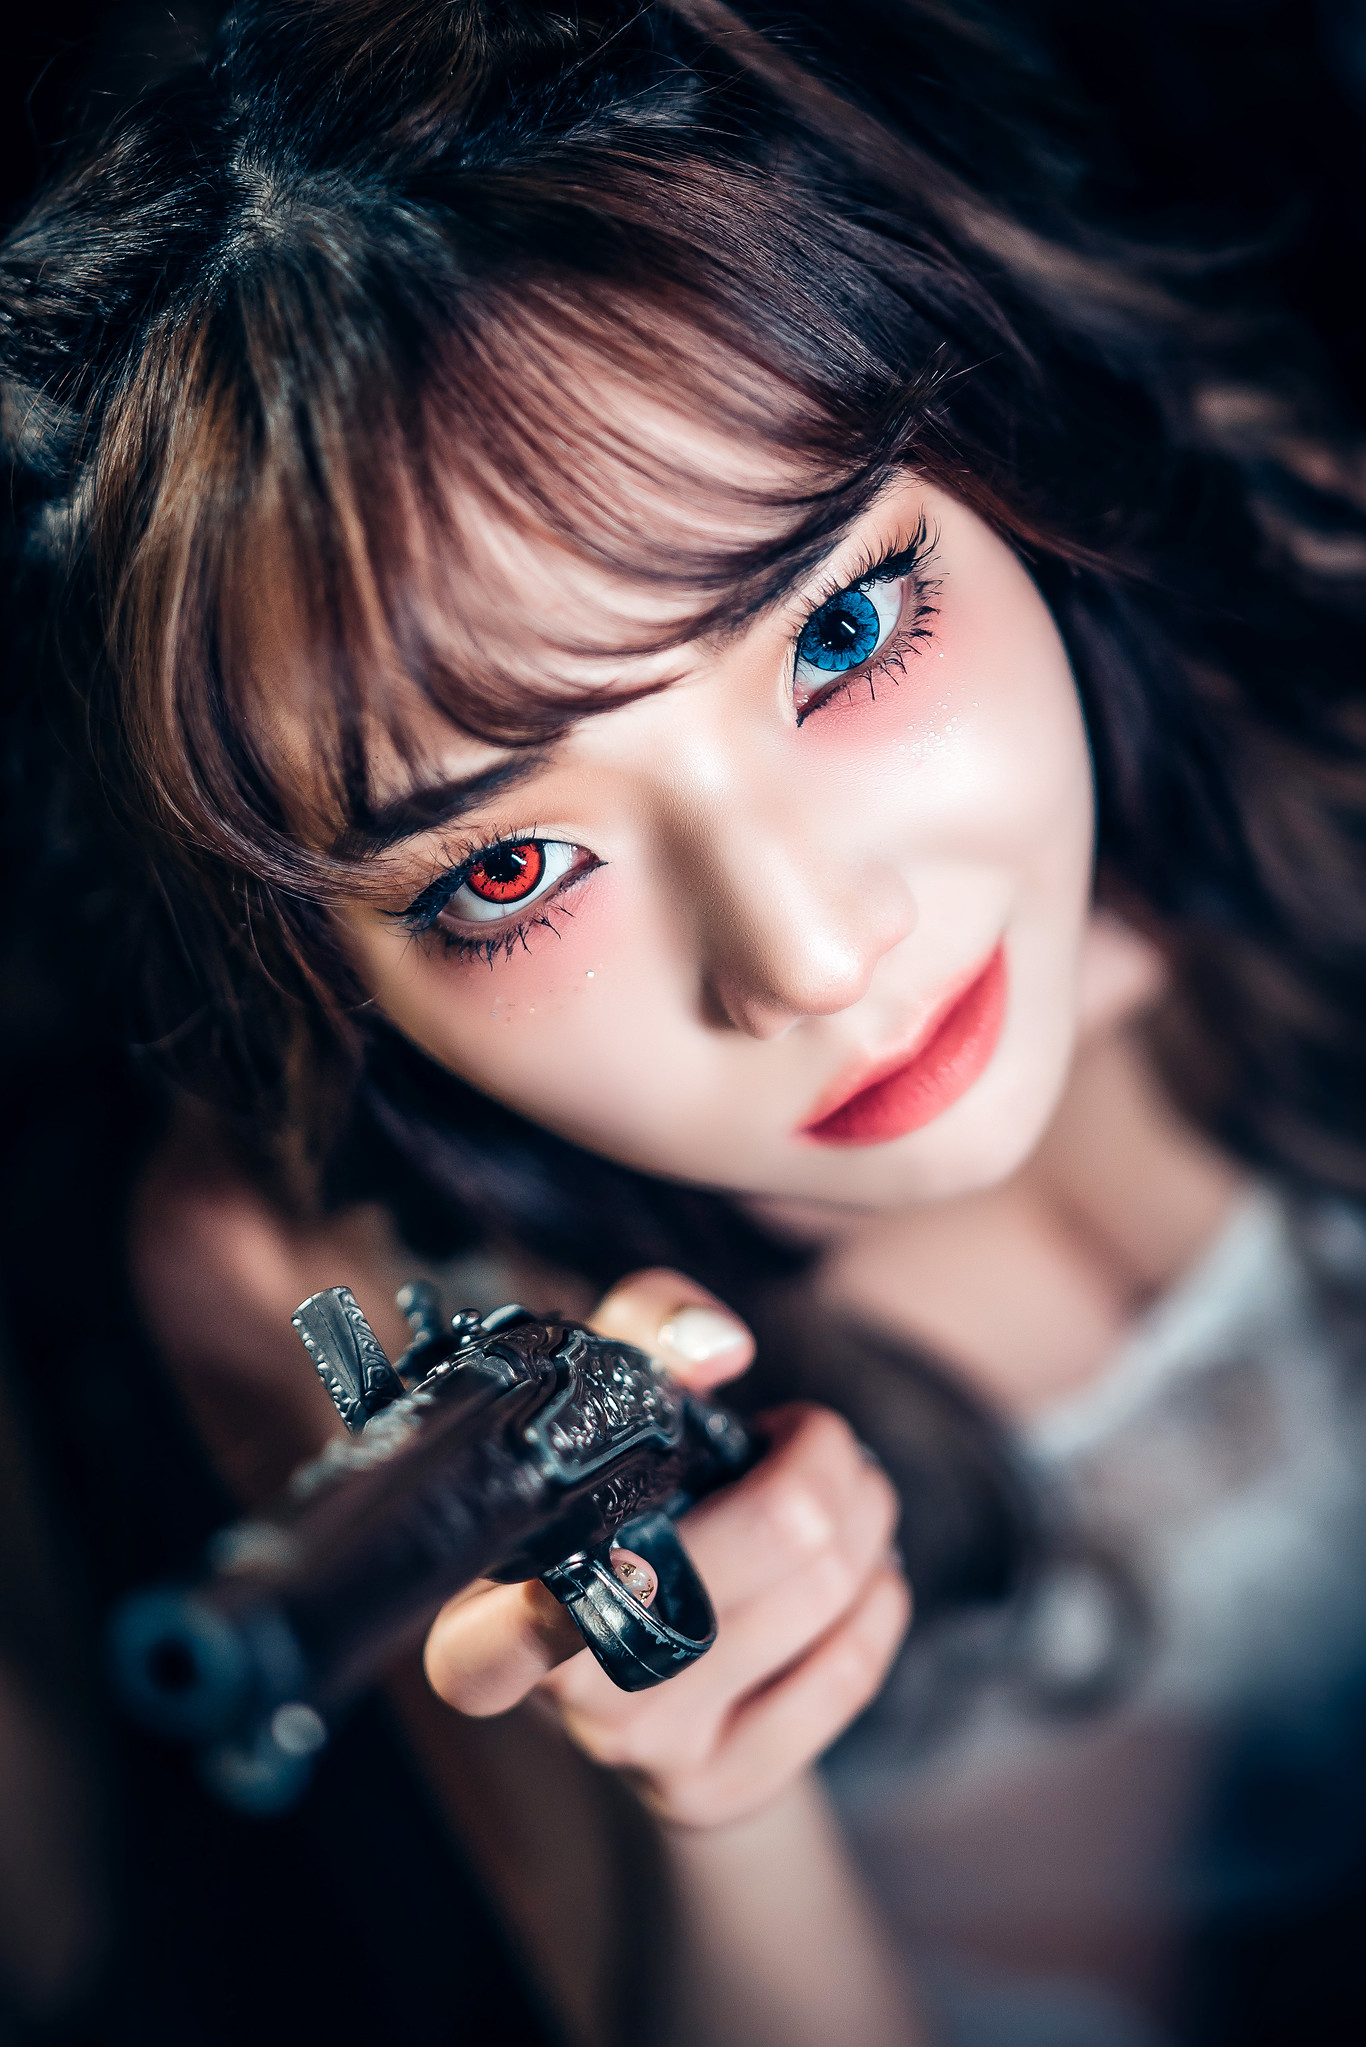 Asian Model Women Gun Heterochromia Contact Lenses Face Closeup Dark Hair Looking At Viewer Aiming R 1366x2047